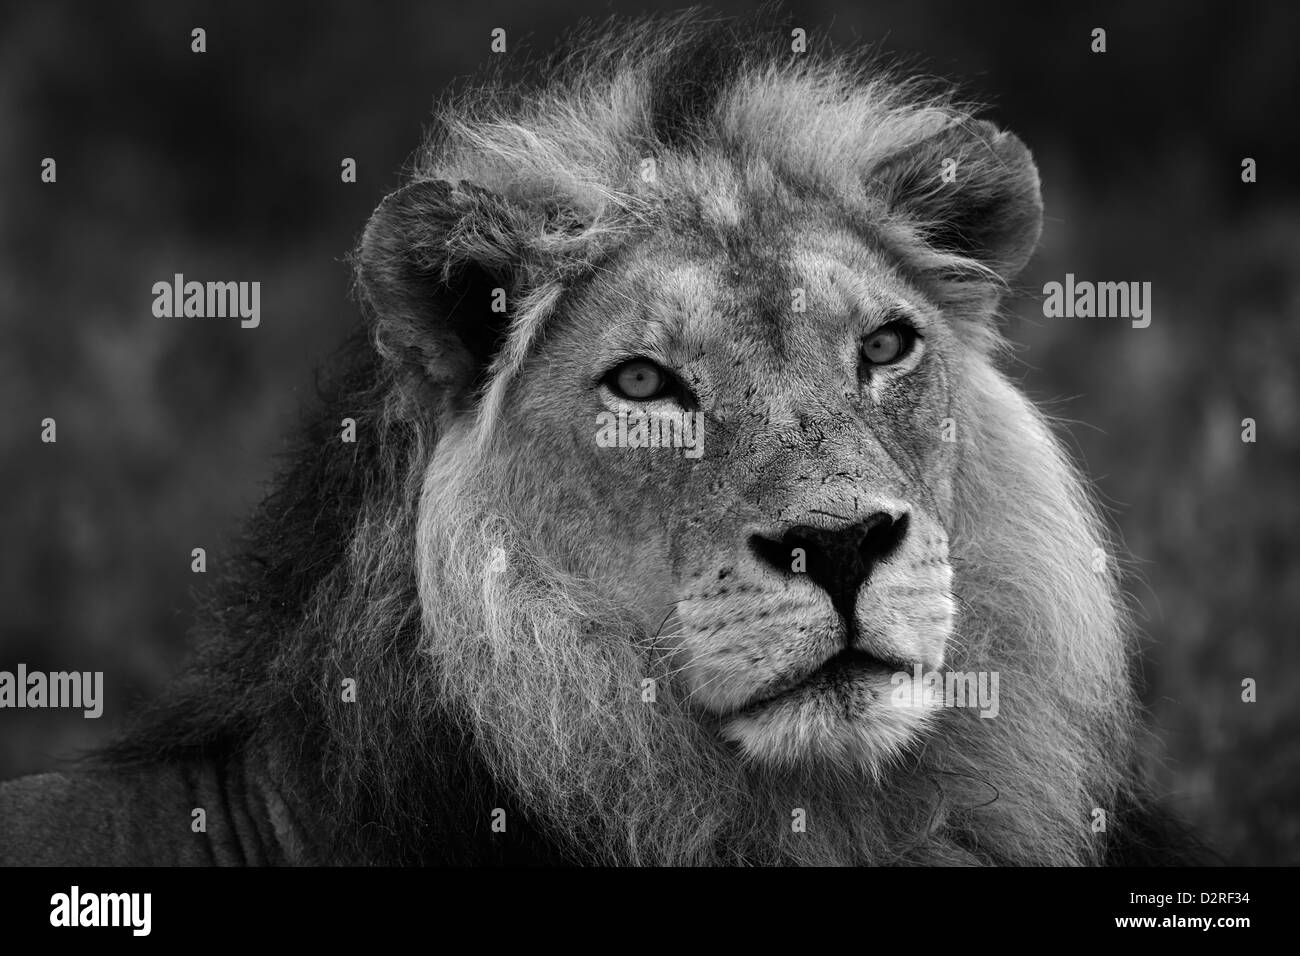 Portrait of a big male lion in black and white, Africa, Afrika, Kalahari desert. dominant, schwarz weiß, s/w Stock Photo